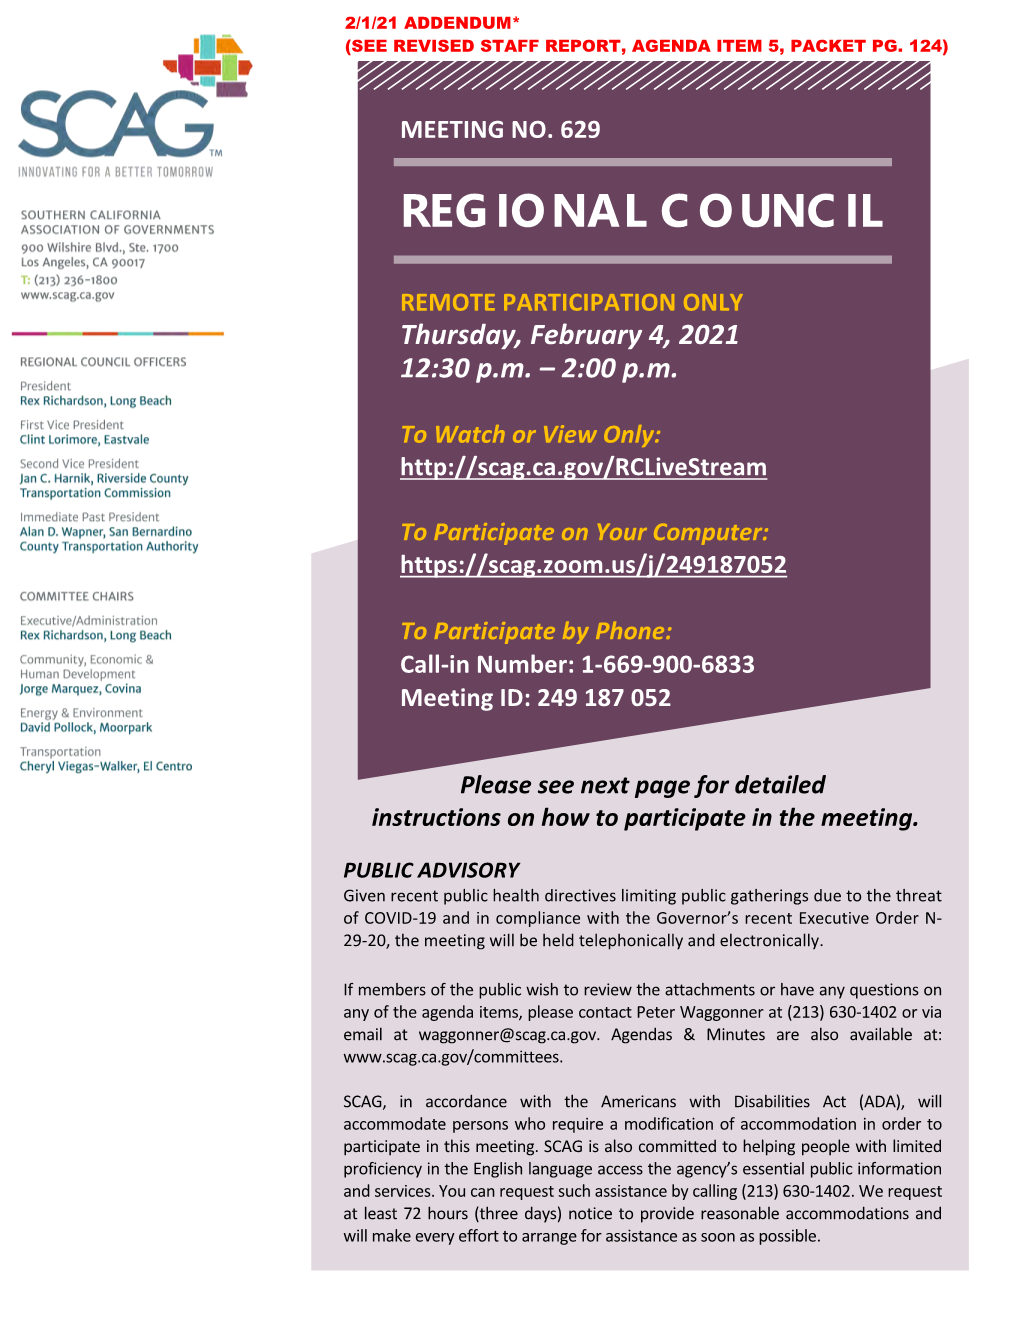 Regional Council February 4, 2021 Full Agenda Packet